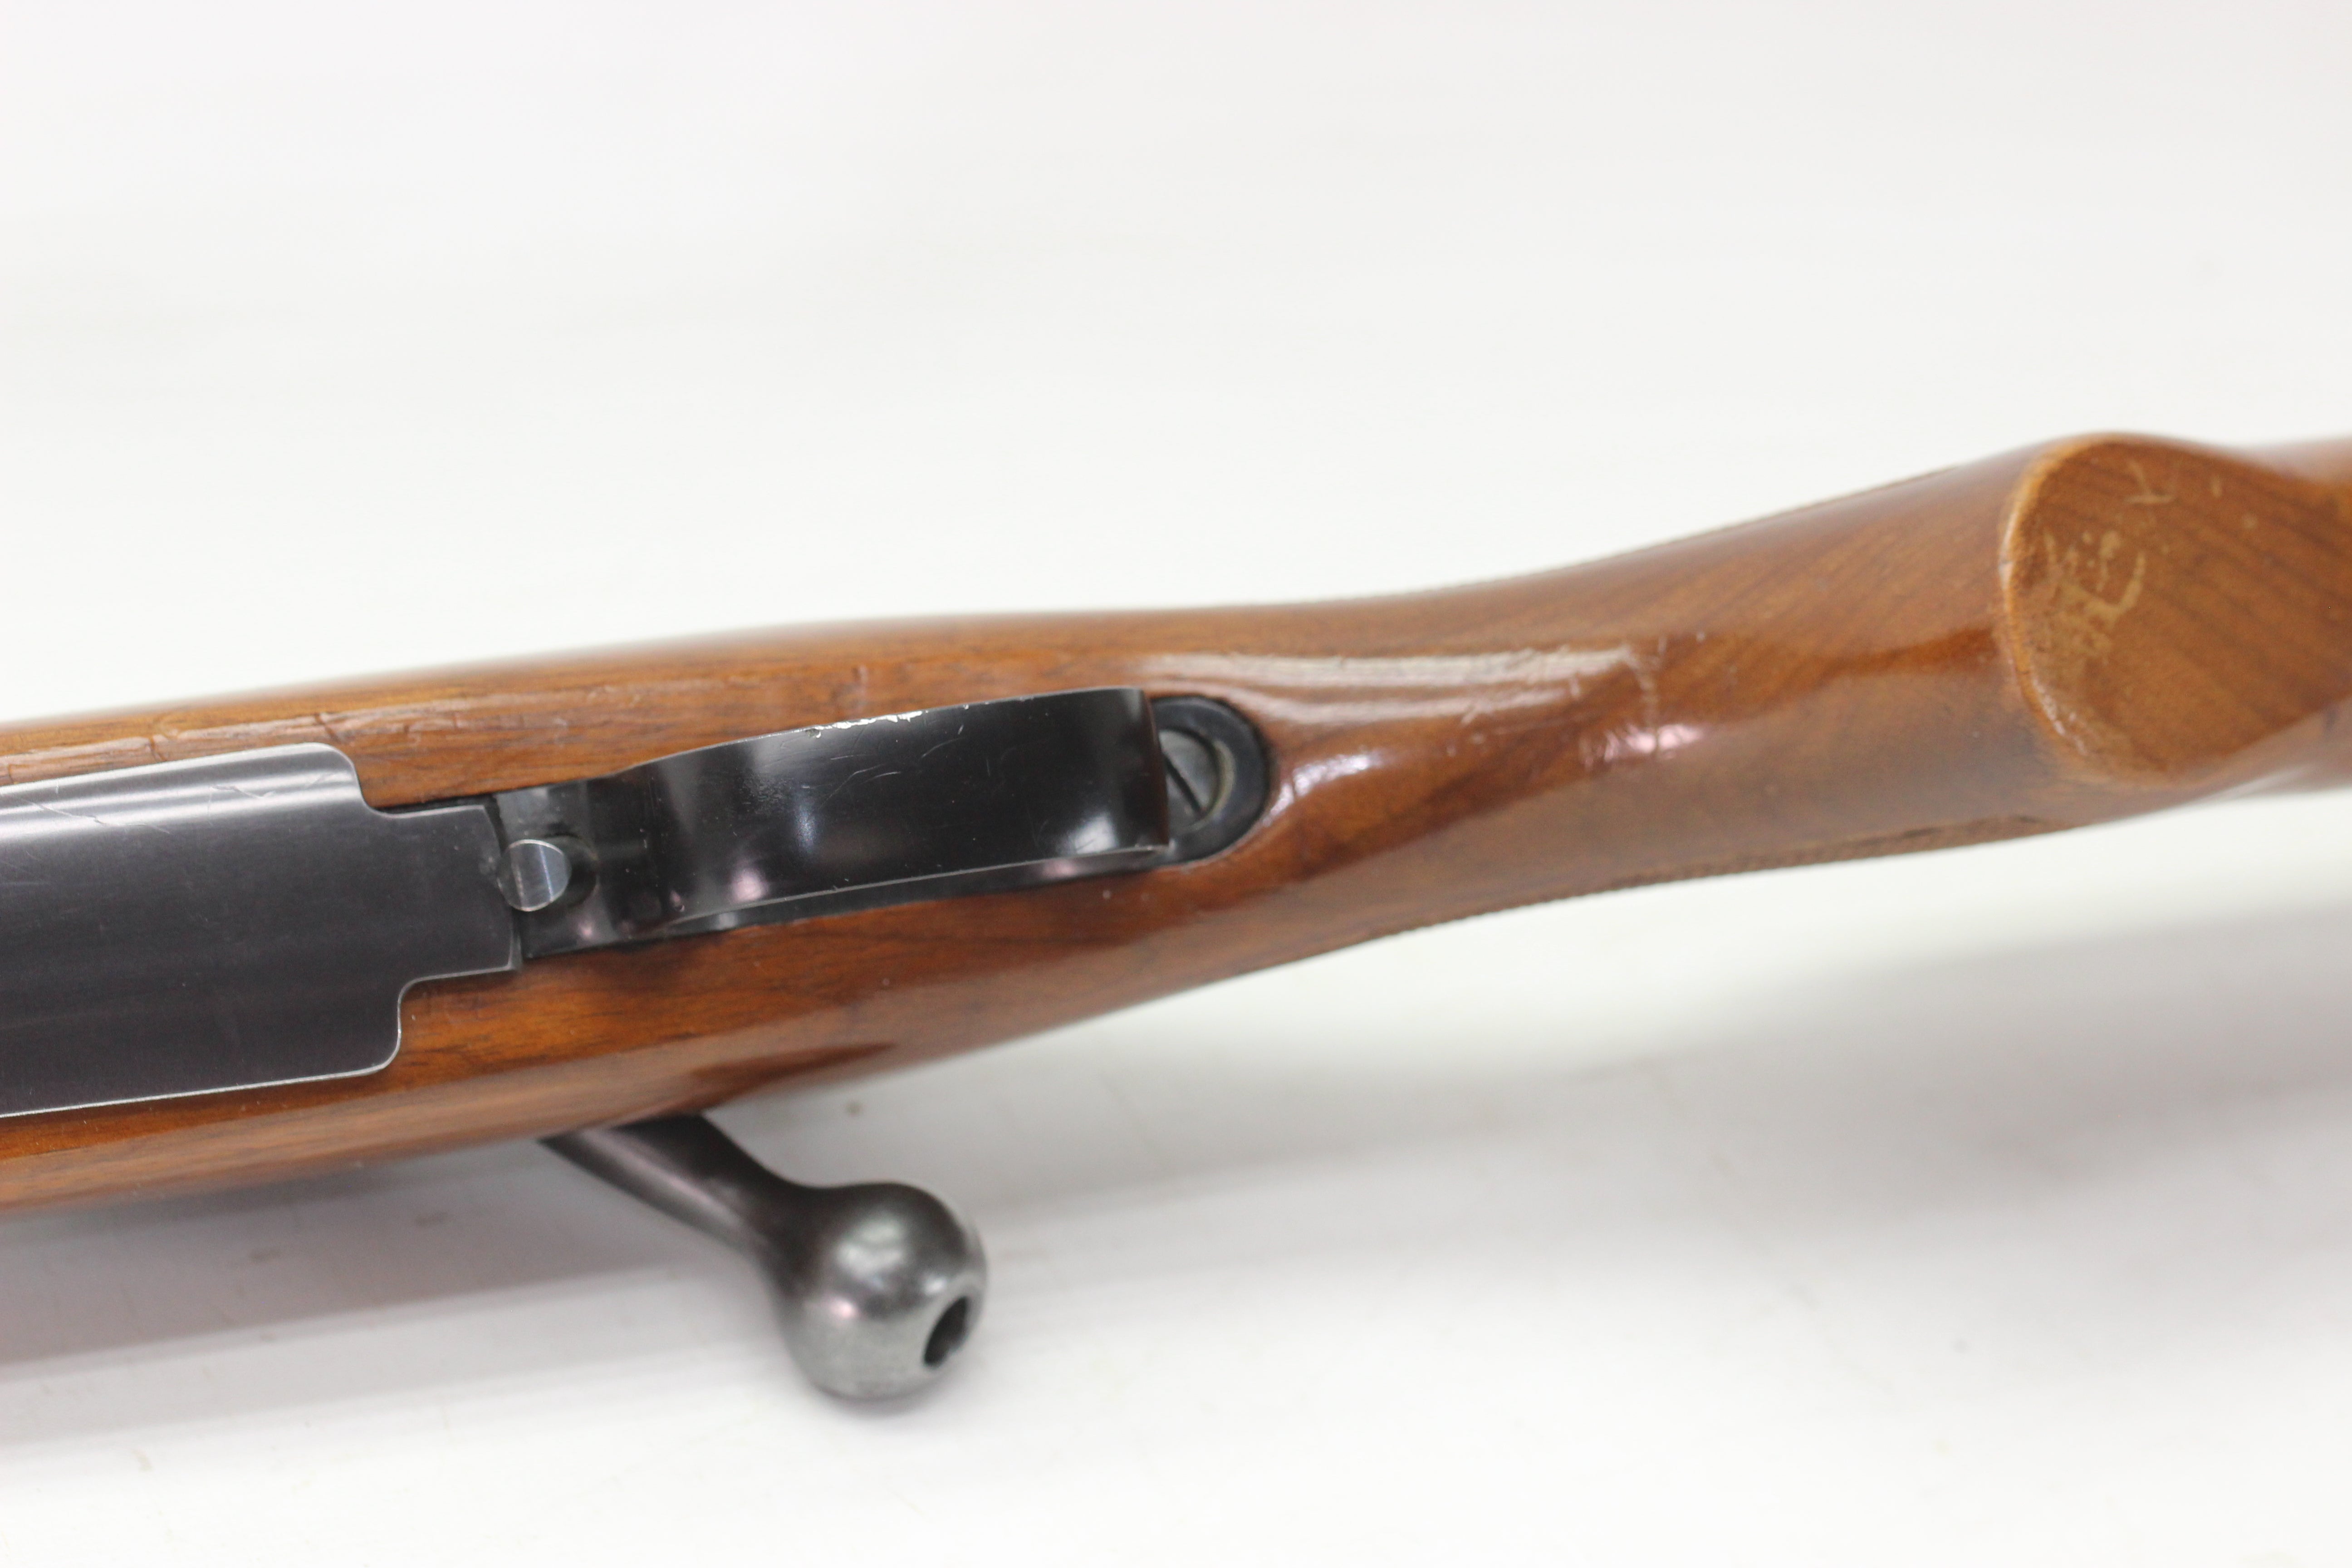 .270 Win Featherweight Rifle - 1962